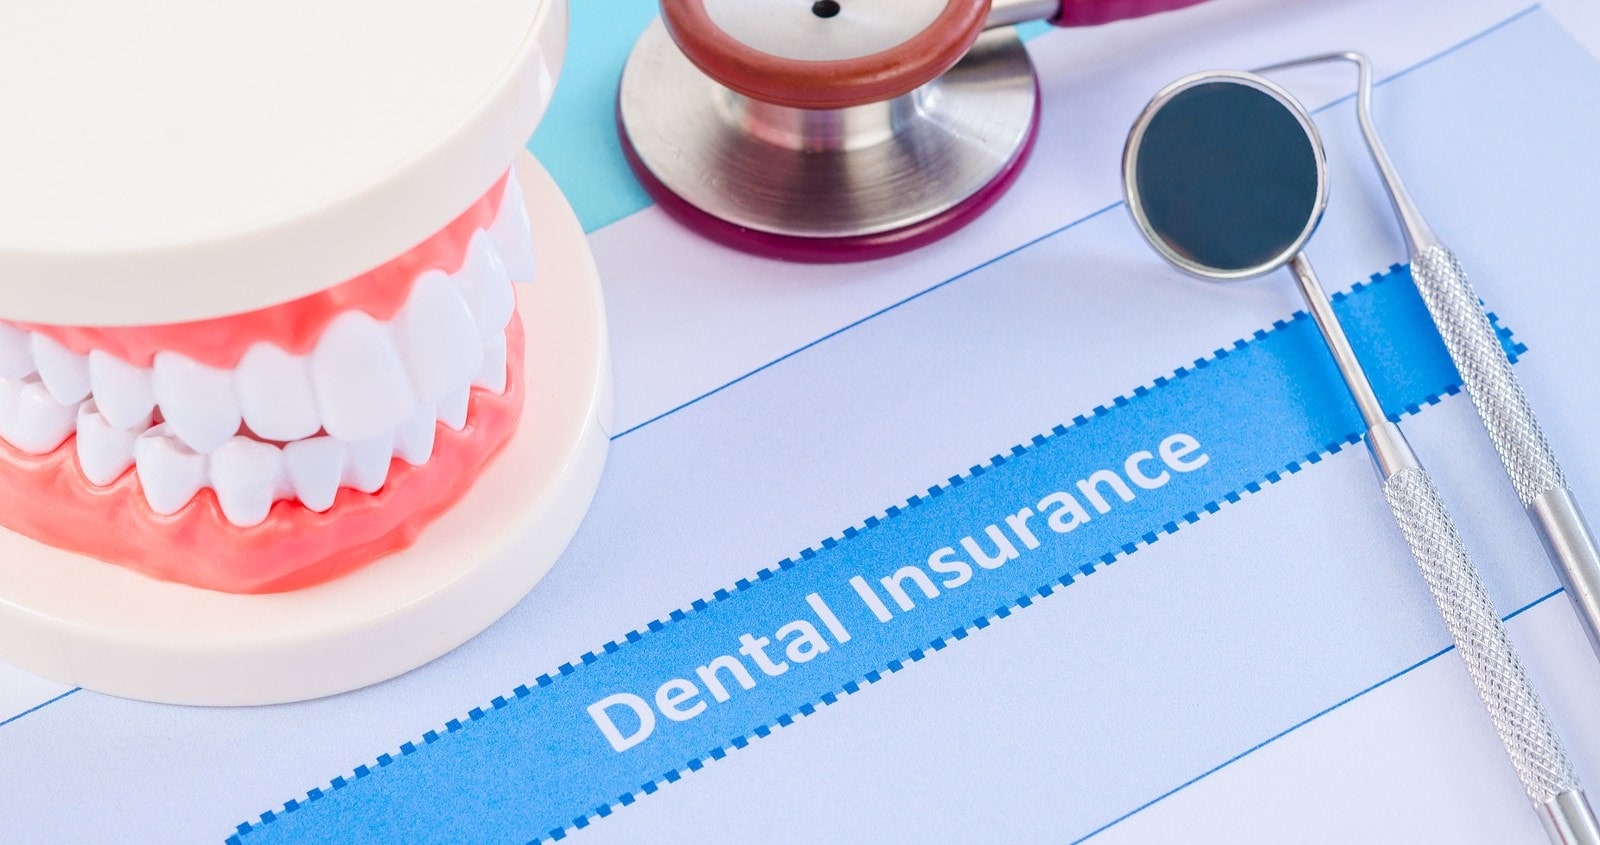 Does Blue Cross Medical Insurance Cover Dental Implants?